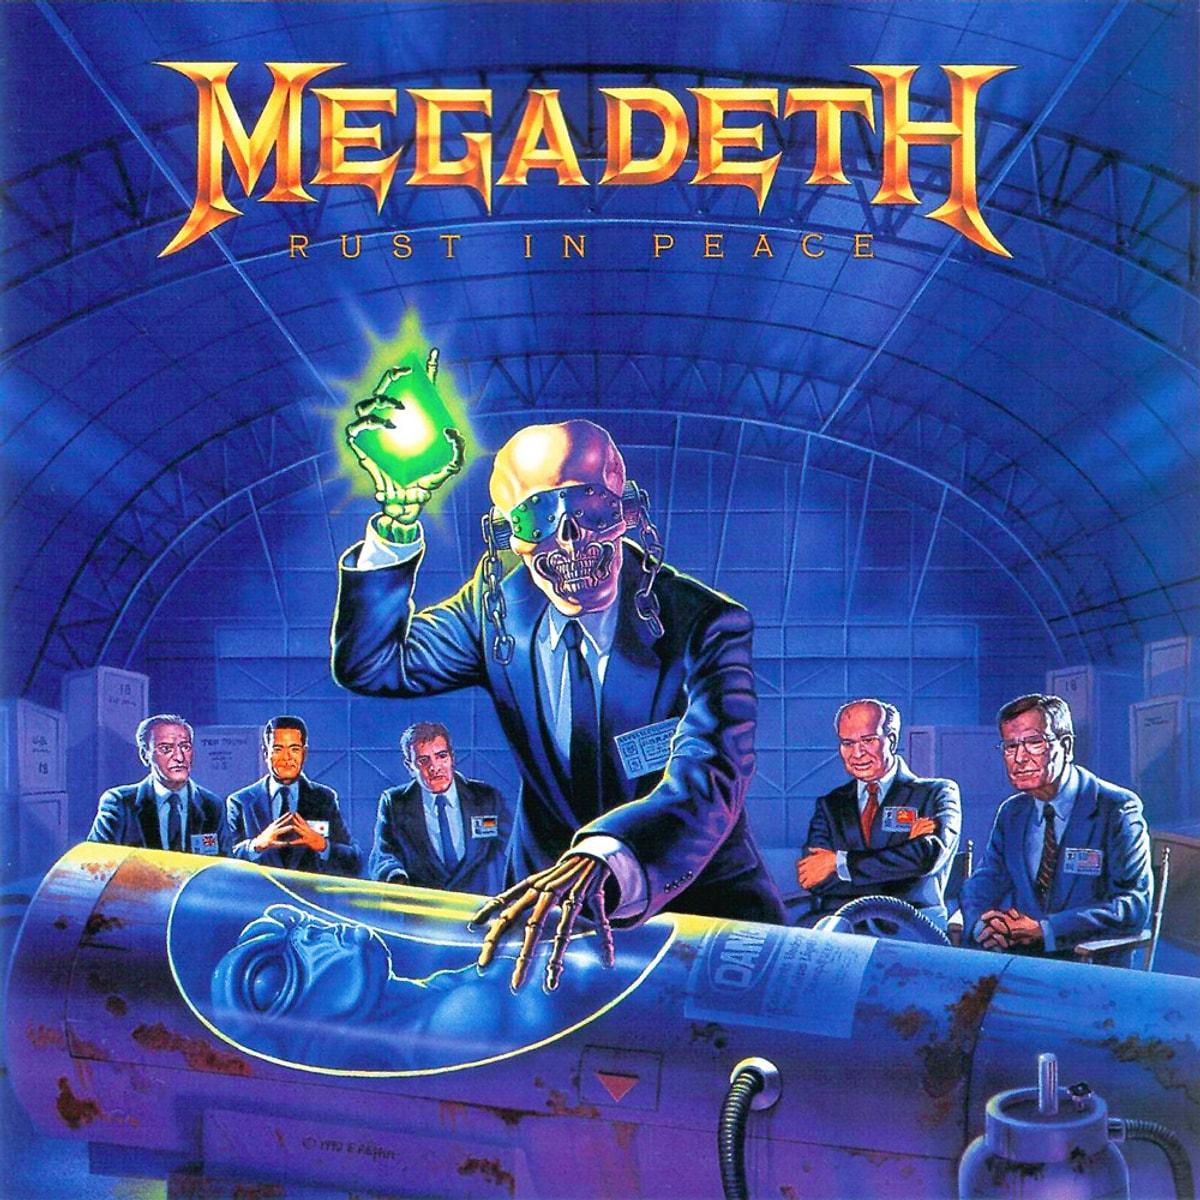 Megadeth rust in peace polaris текст фото 89